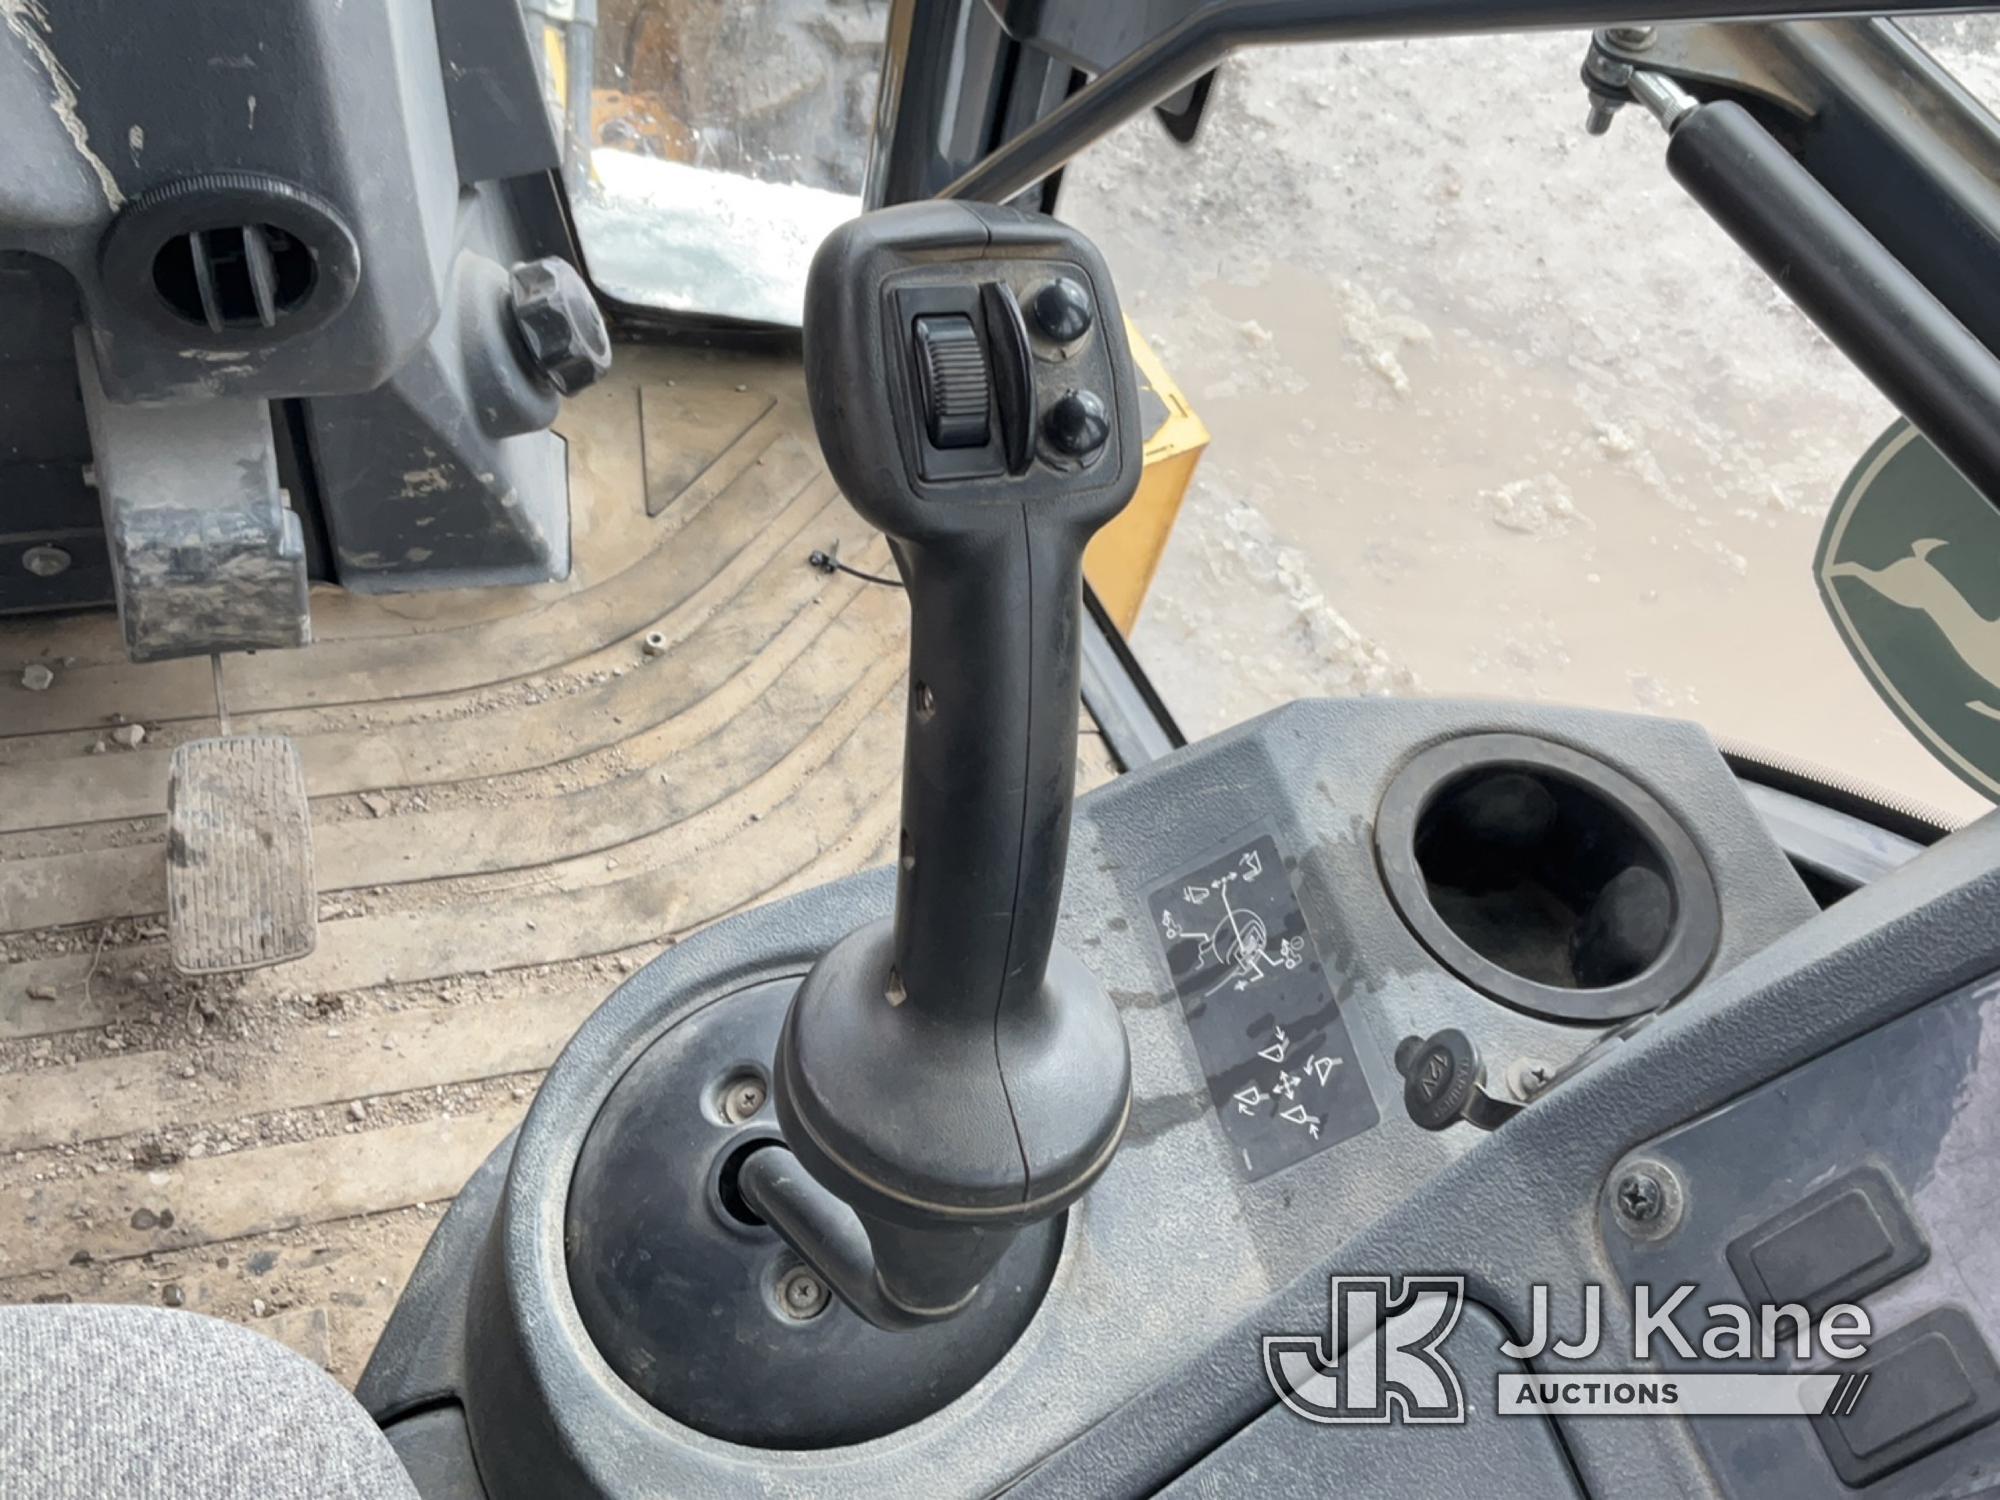 (Rome, NY) 2015 John Deere 310SK 4x4 Tractor Loader Backhoe No Title) (Runs & Operates, Bad Steering